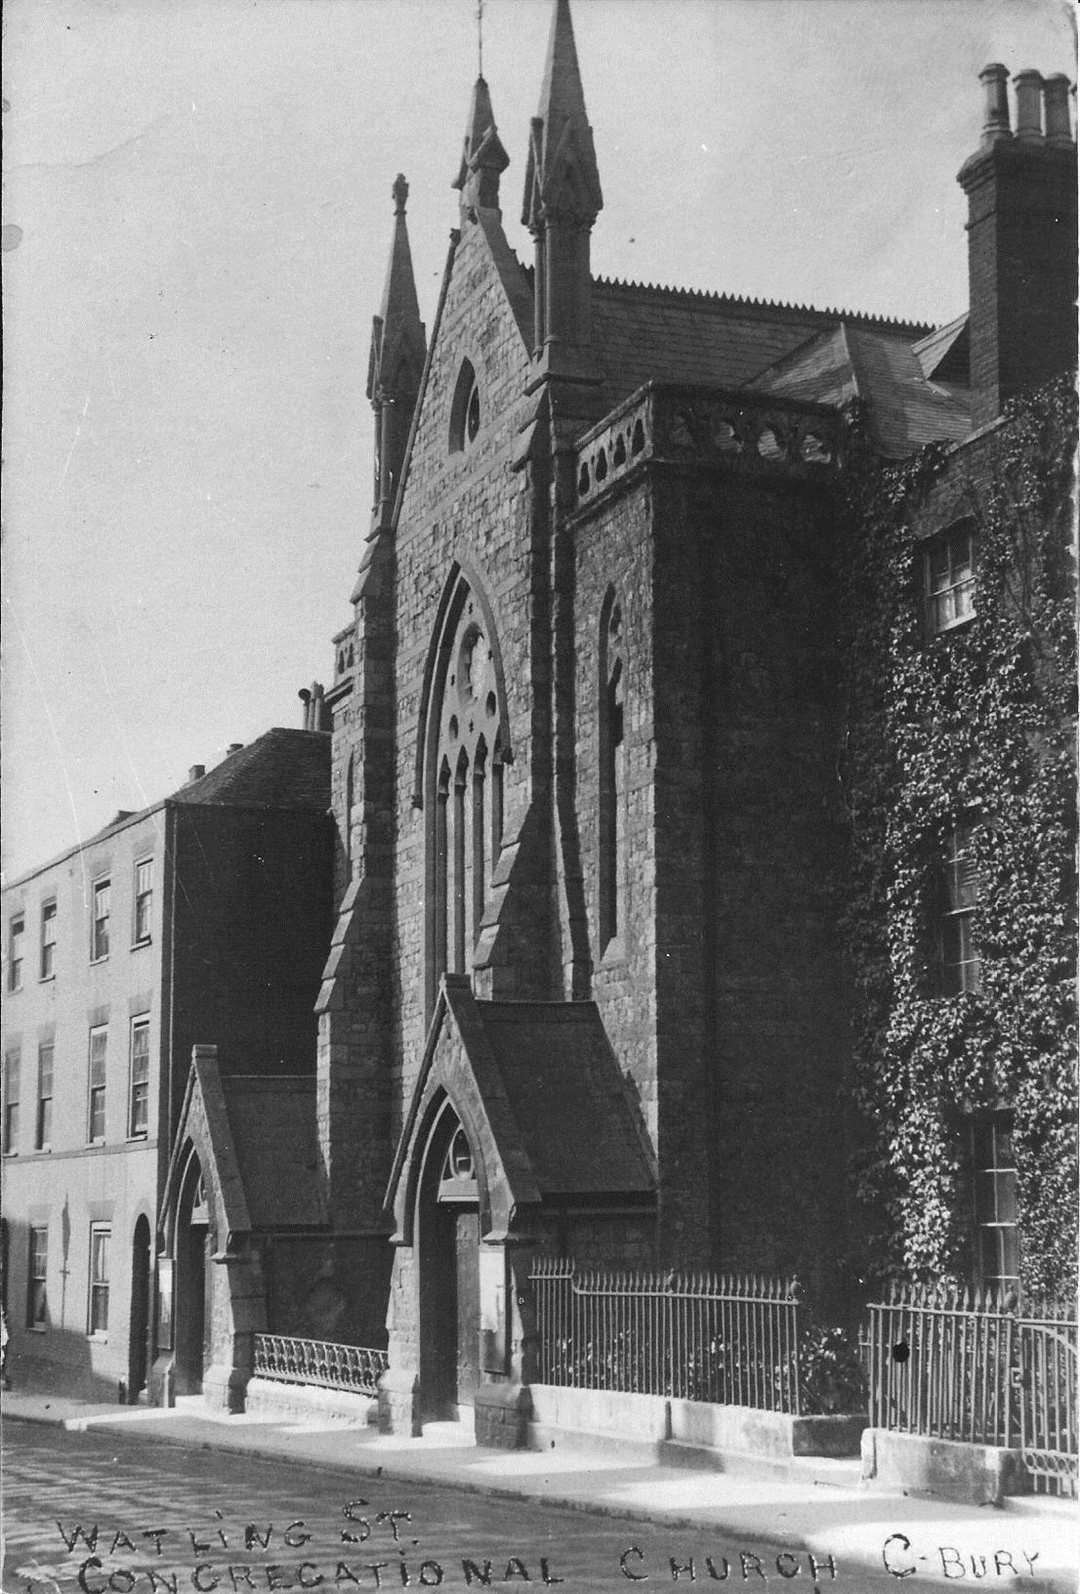 The Watling Street church, in 1910 (5424476)